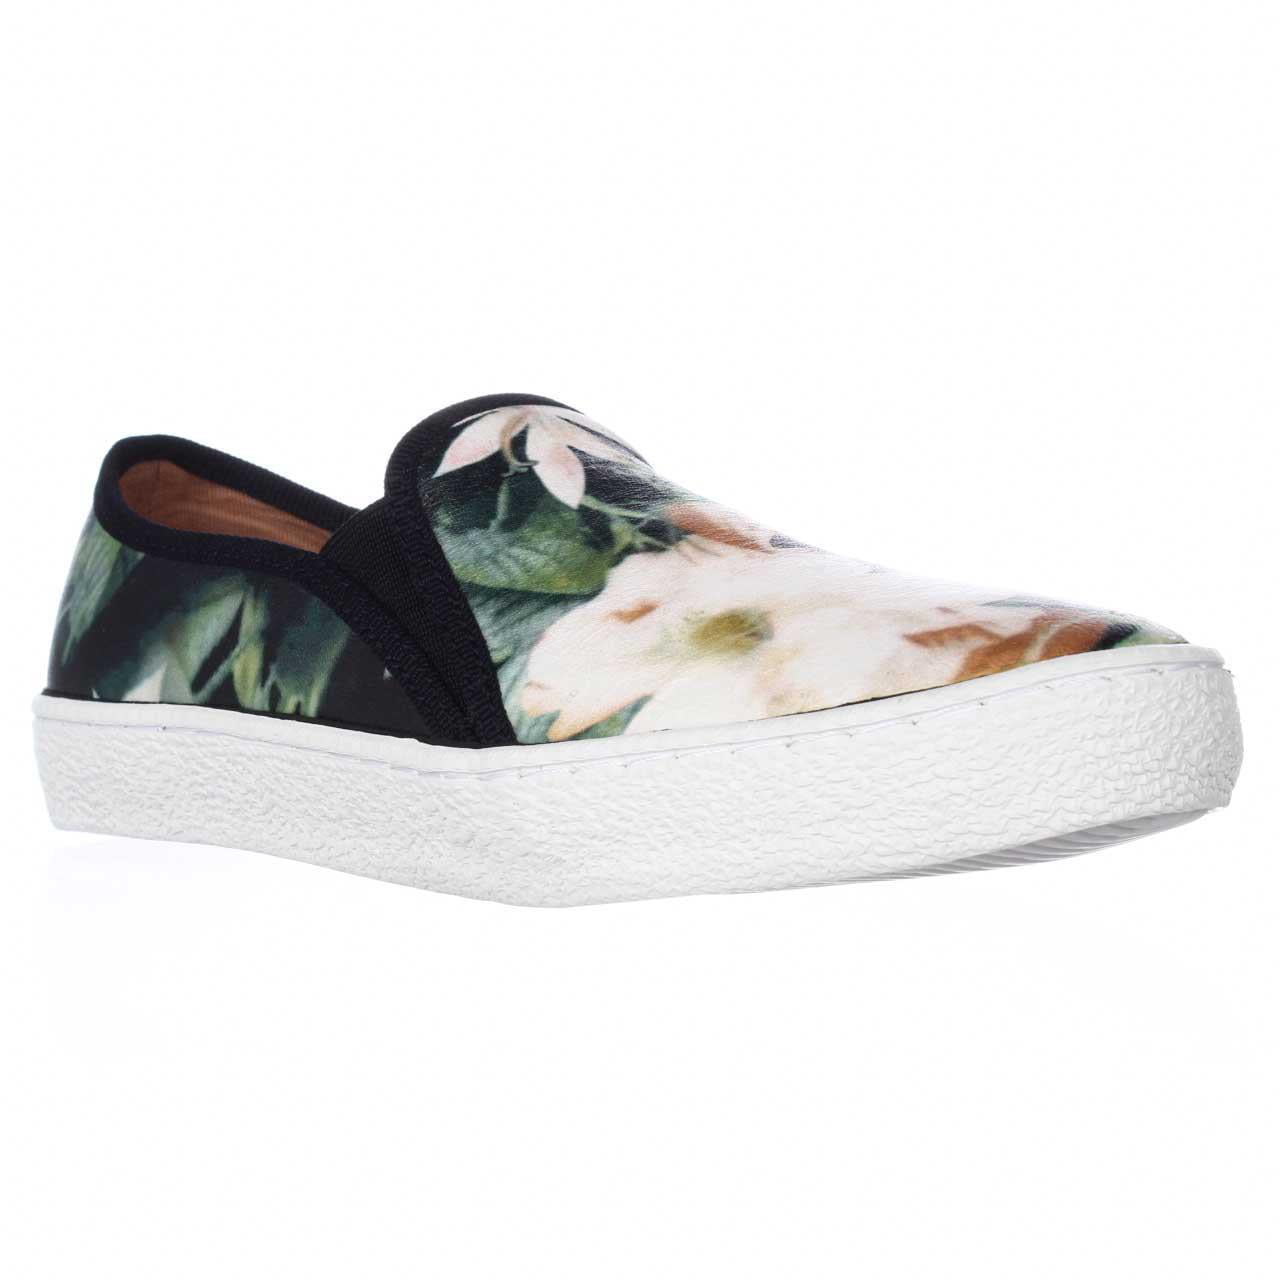 Womens Corso Como Fashion Slip On Sneakers Navy Floral - Walmart.com